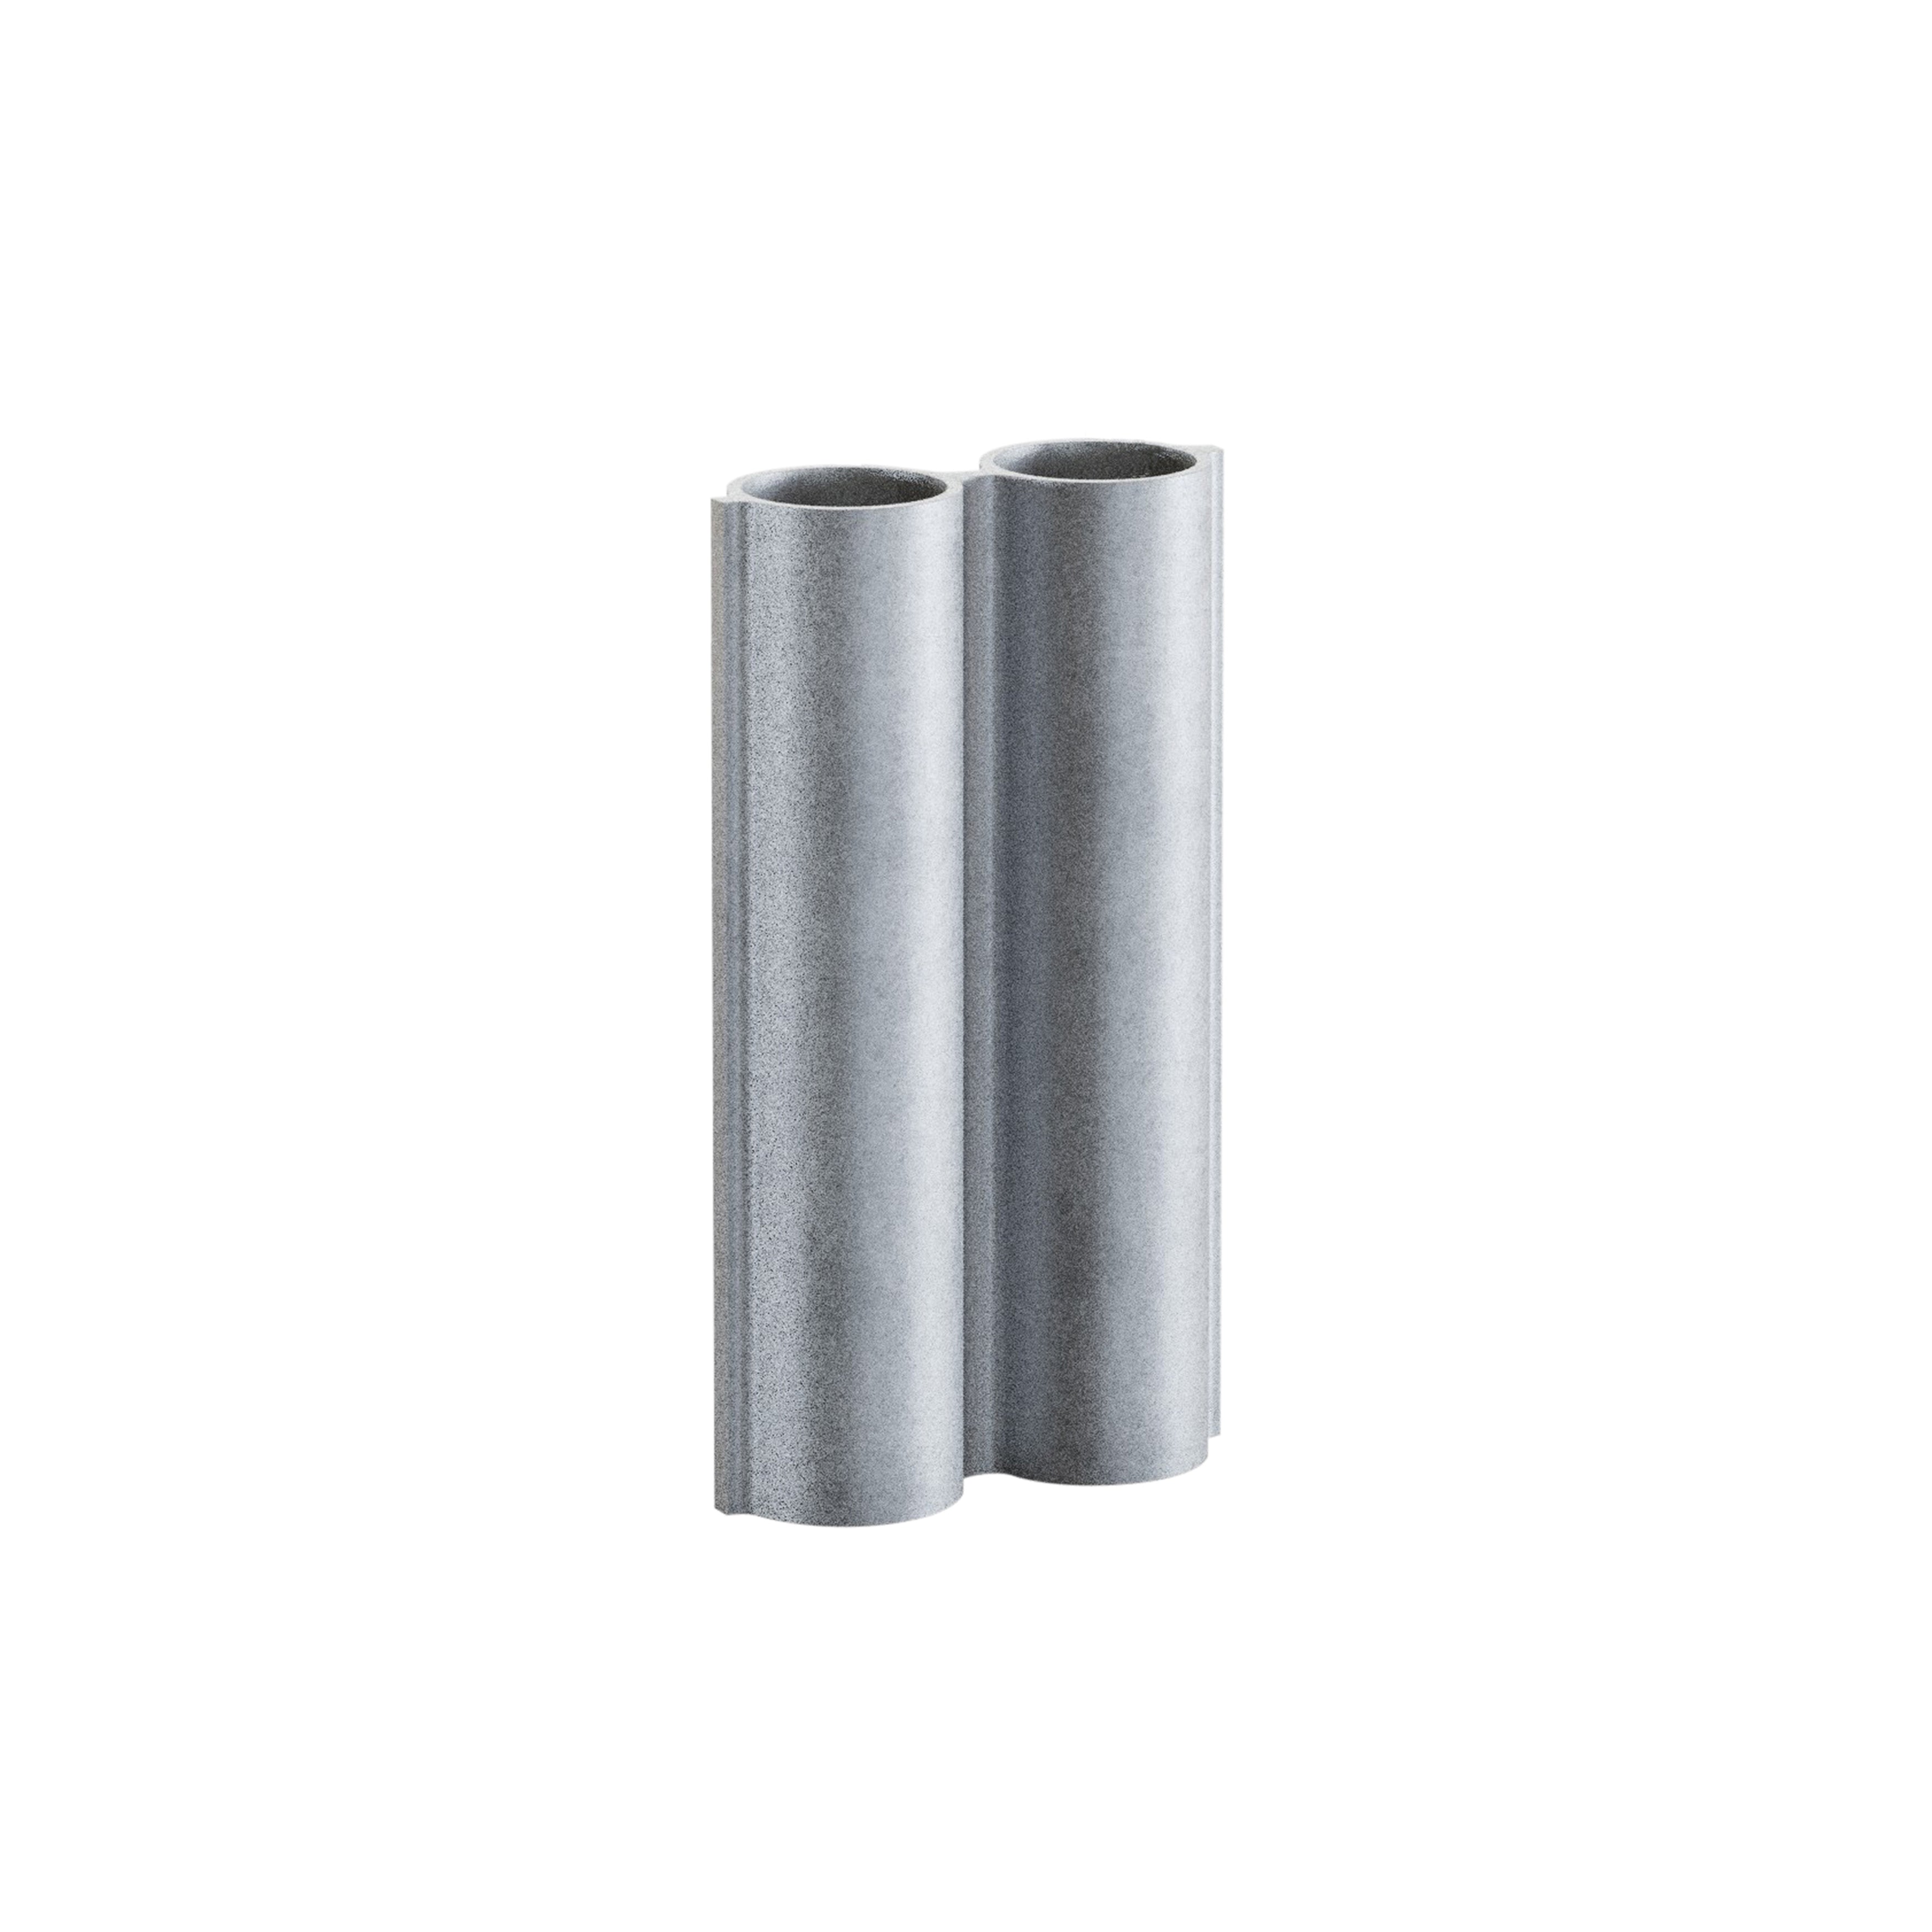 Silo 2VK Vase: Tumbled Aluminum